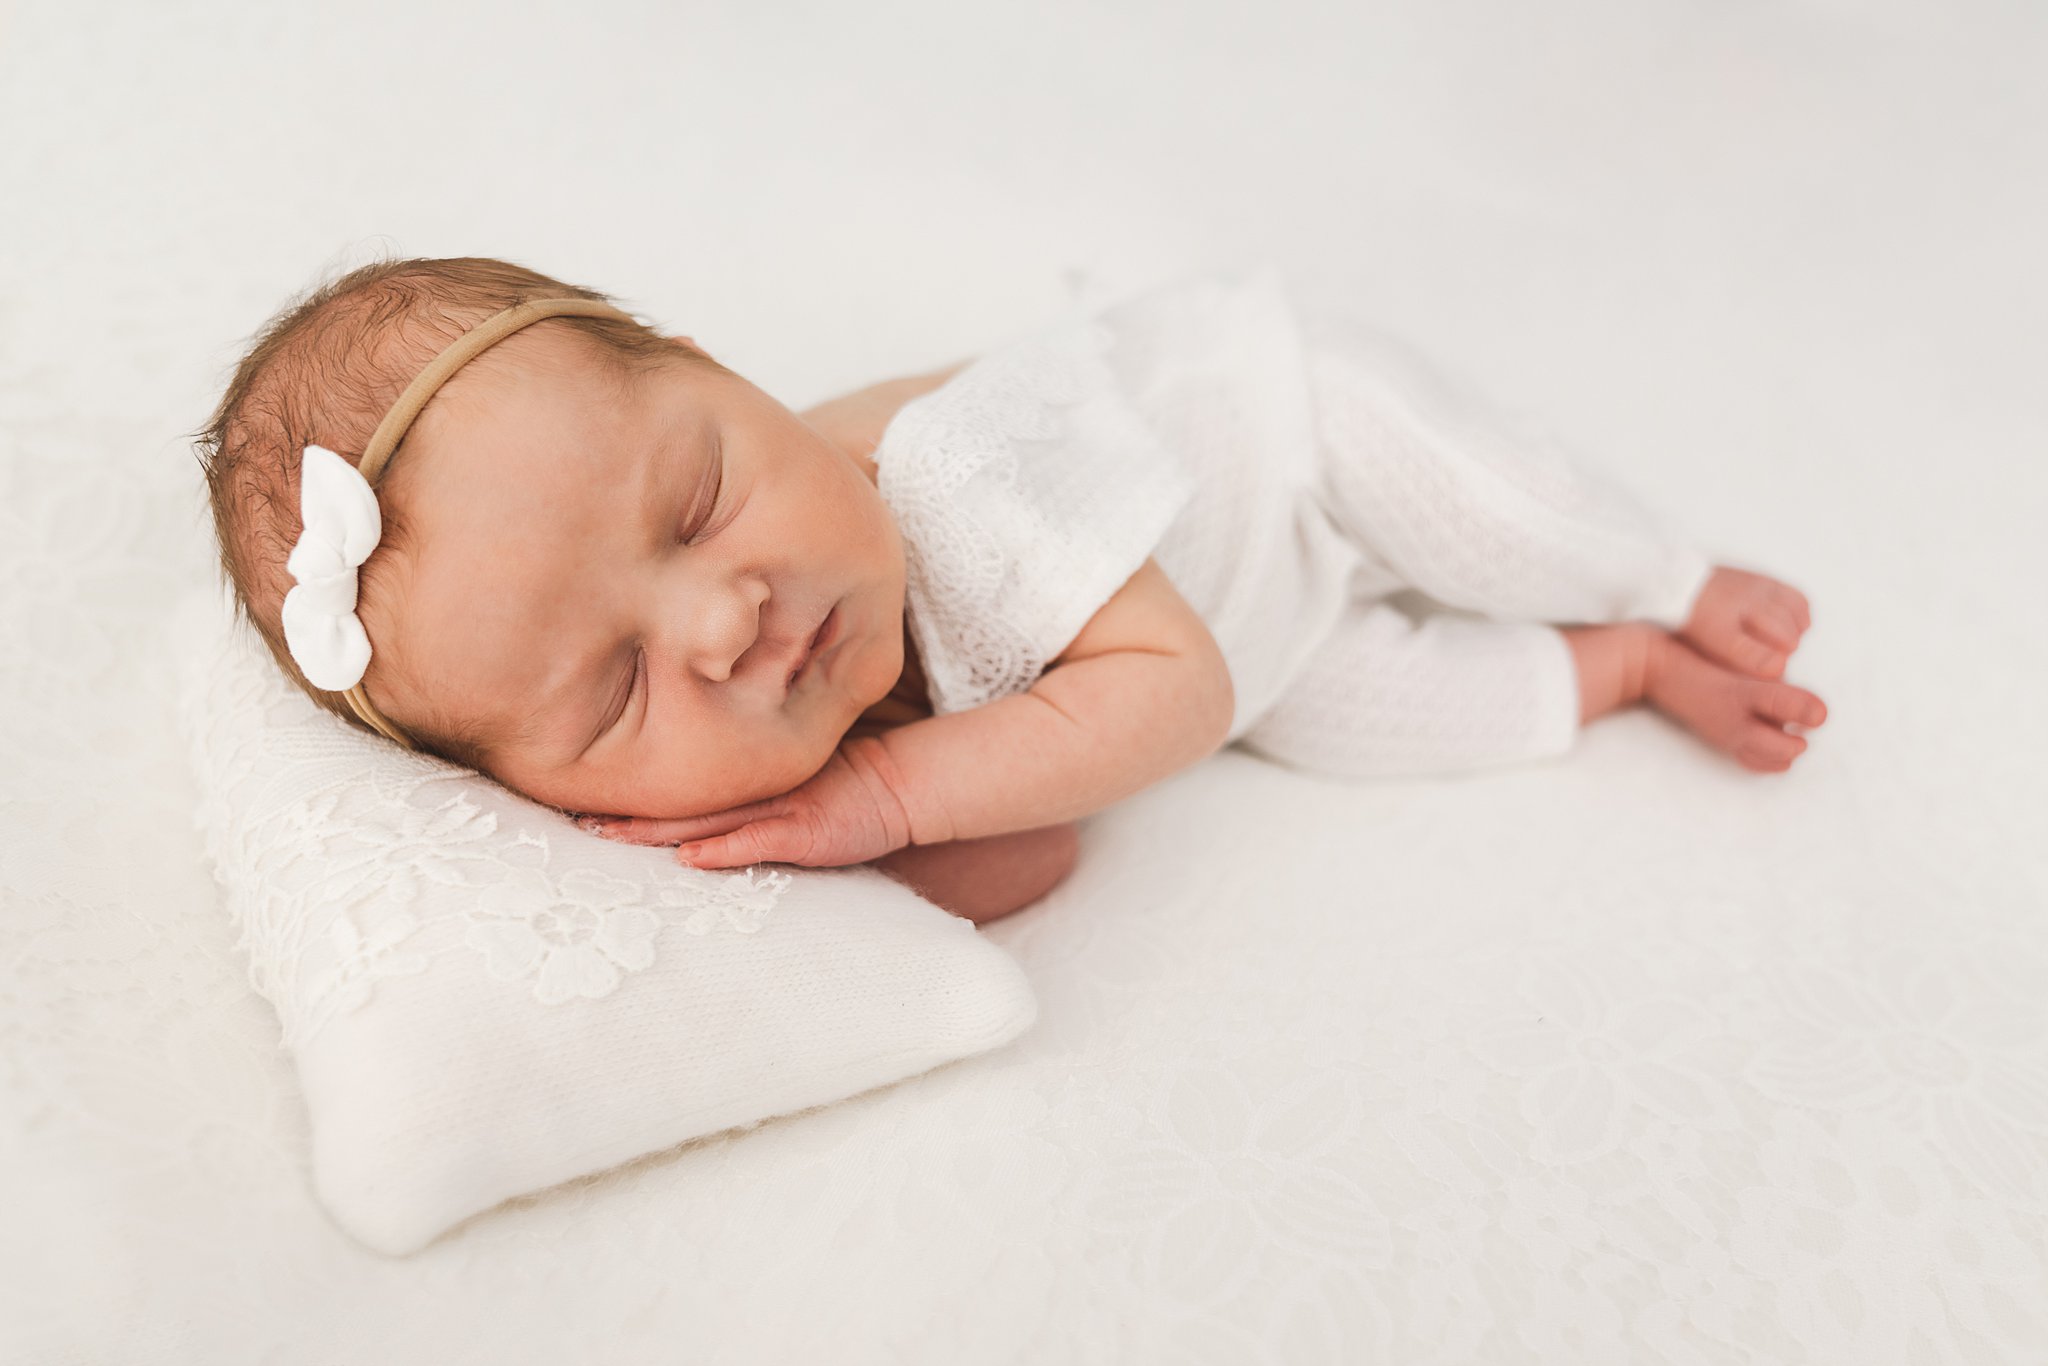 Newborn baby sleeps in a white onesie with hands under head on a pillow in a studio